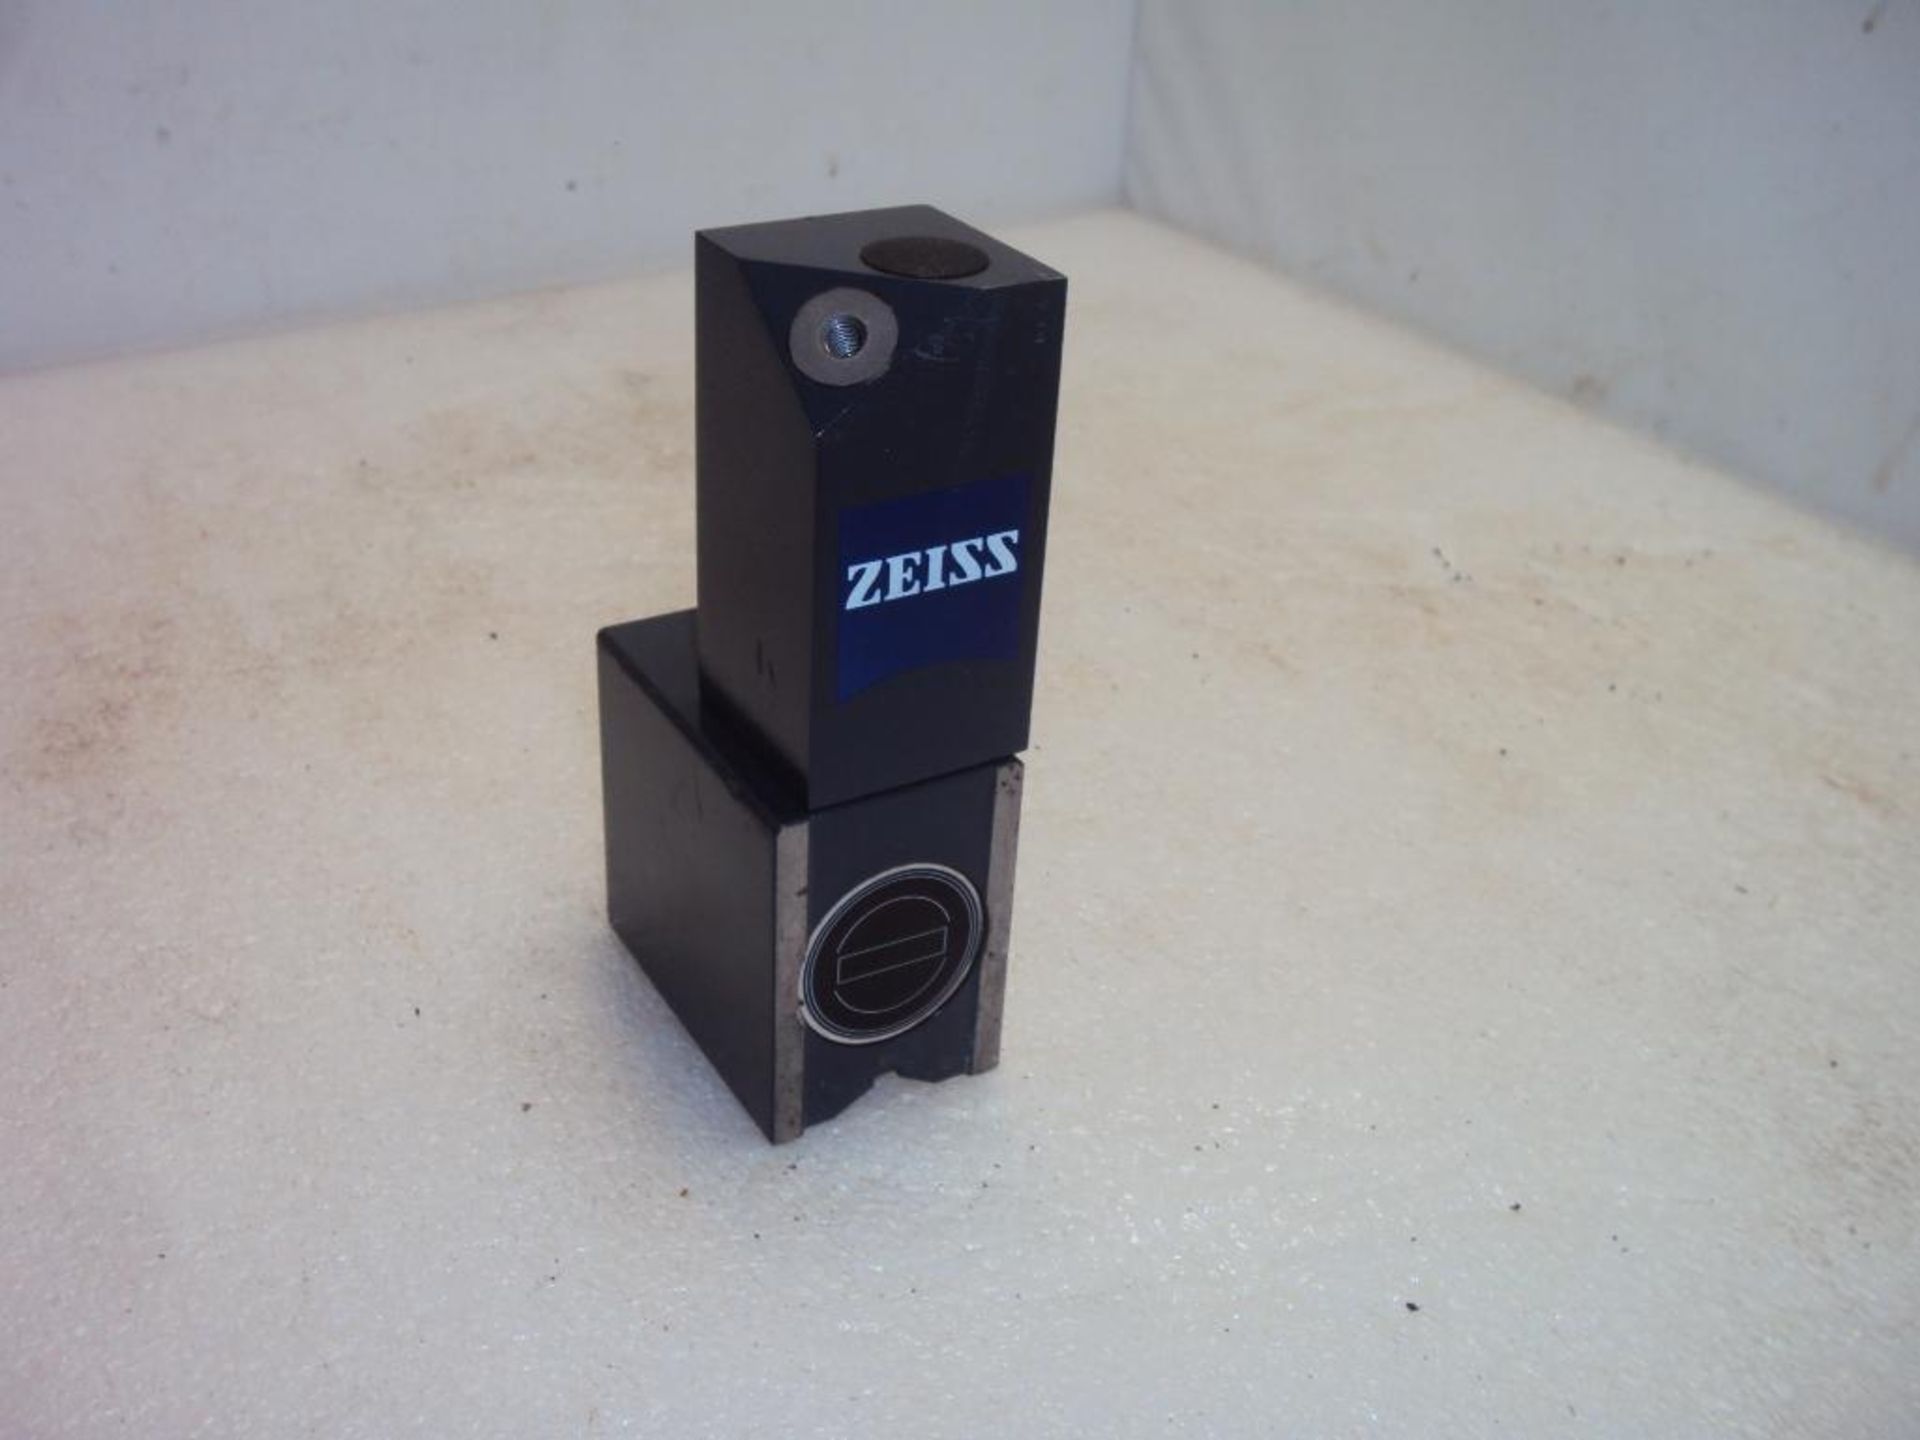 Zeiss Magnetic Vee Block Calibration Ball Holder